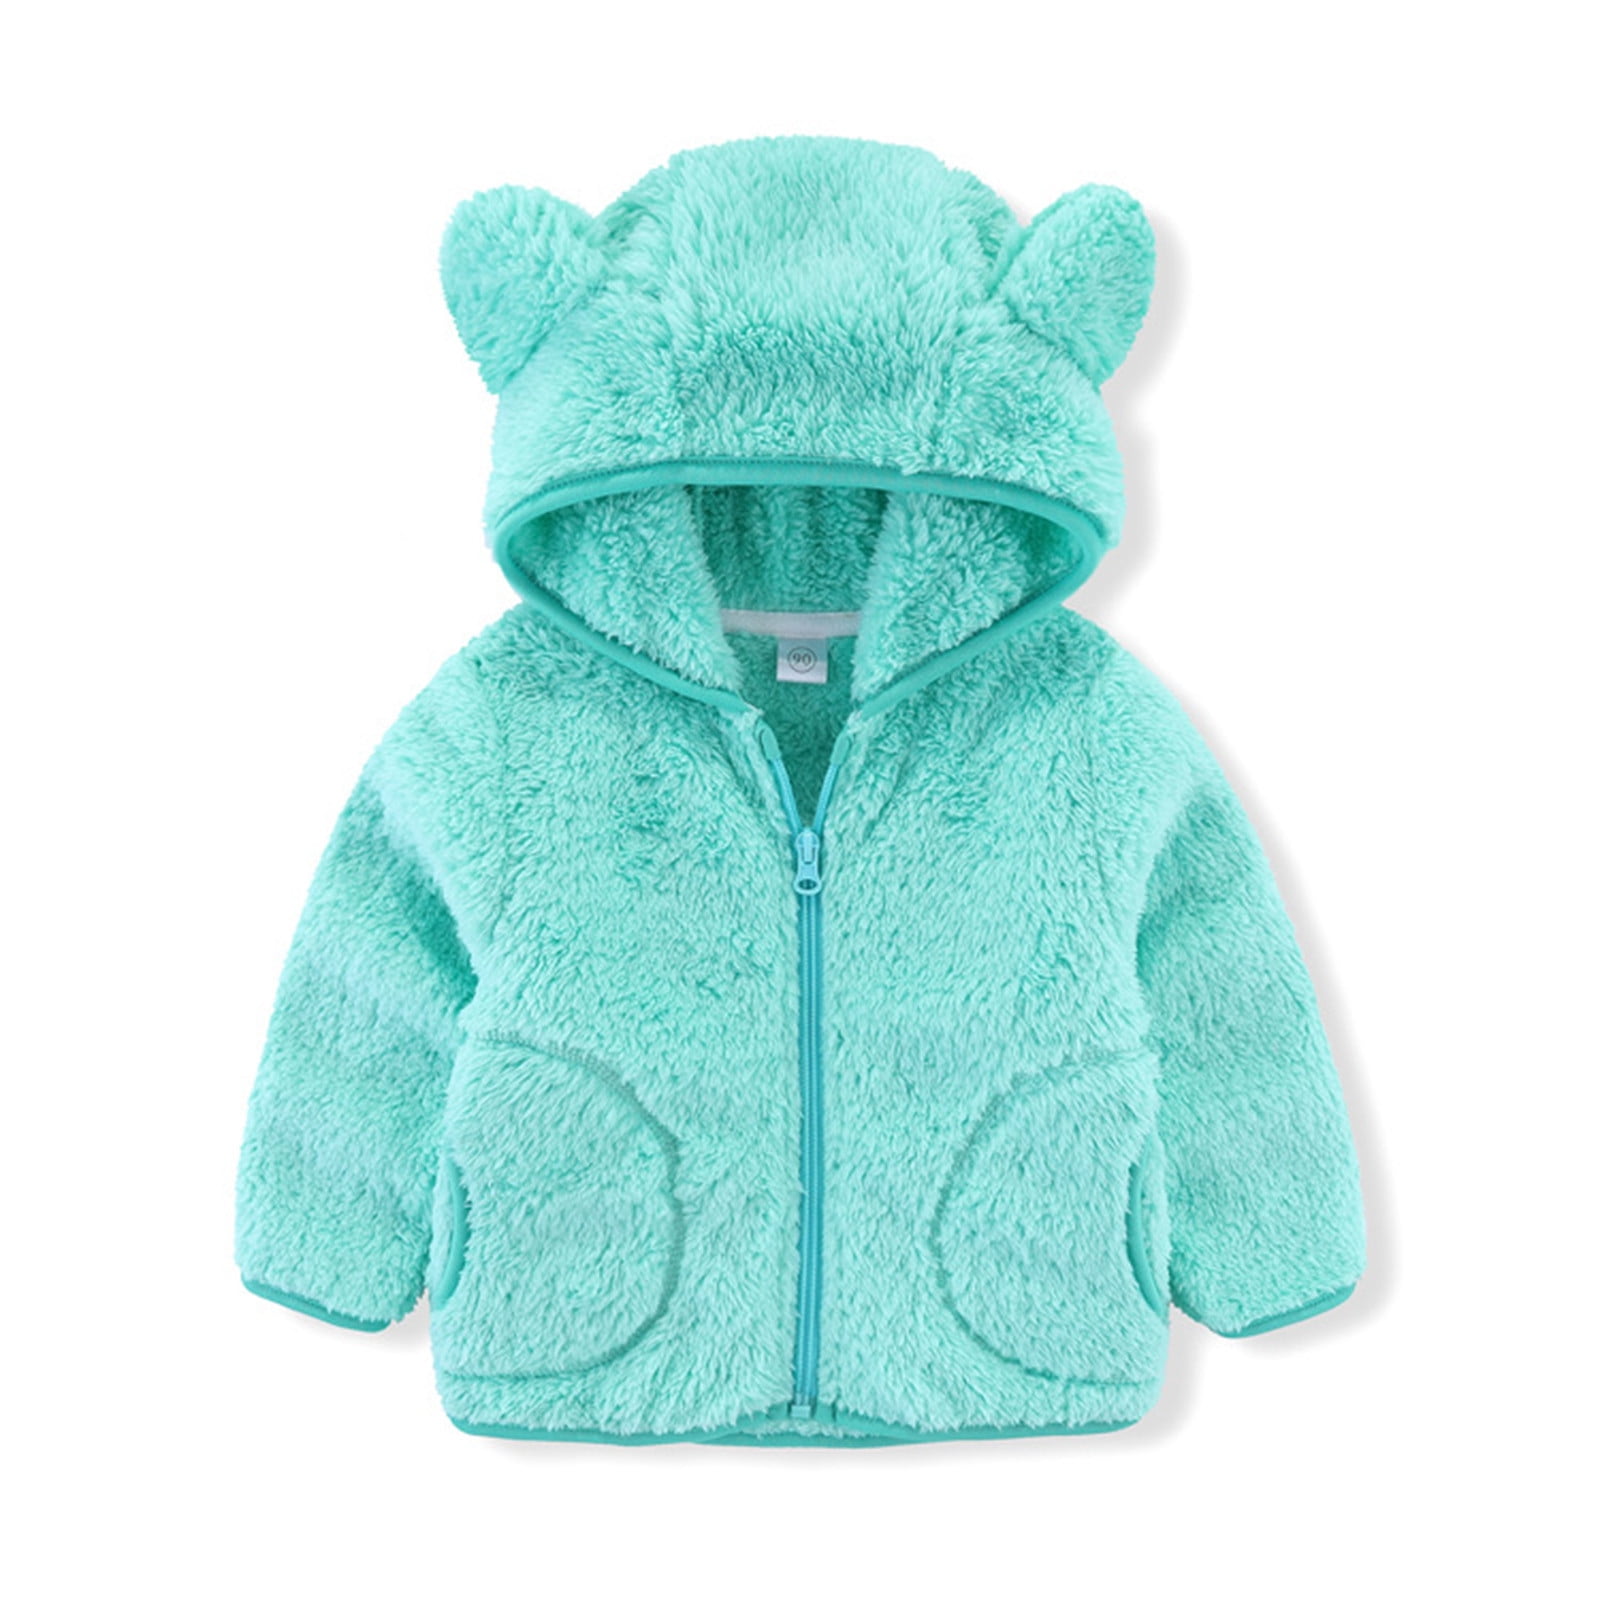 Toddler Kids Baby Fleece Hooded Jacket Cute Bear Ears Thick Winter Warm Zip Up Solid Coat Snowsuit Outwear for 6M-4T 